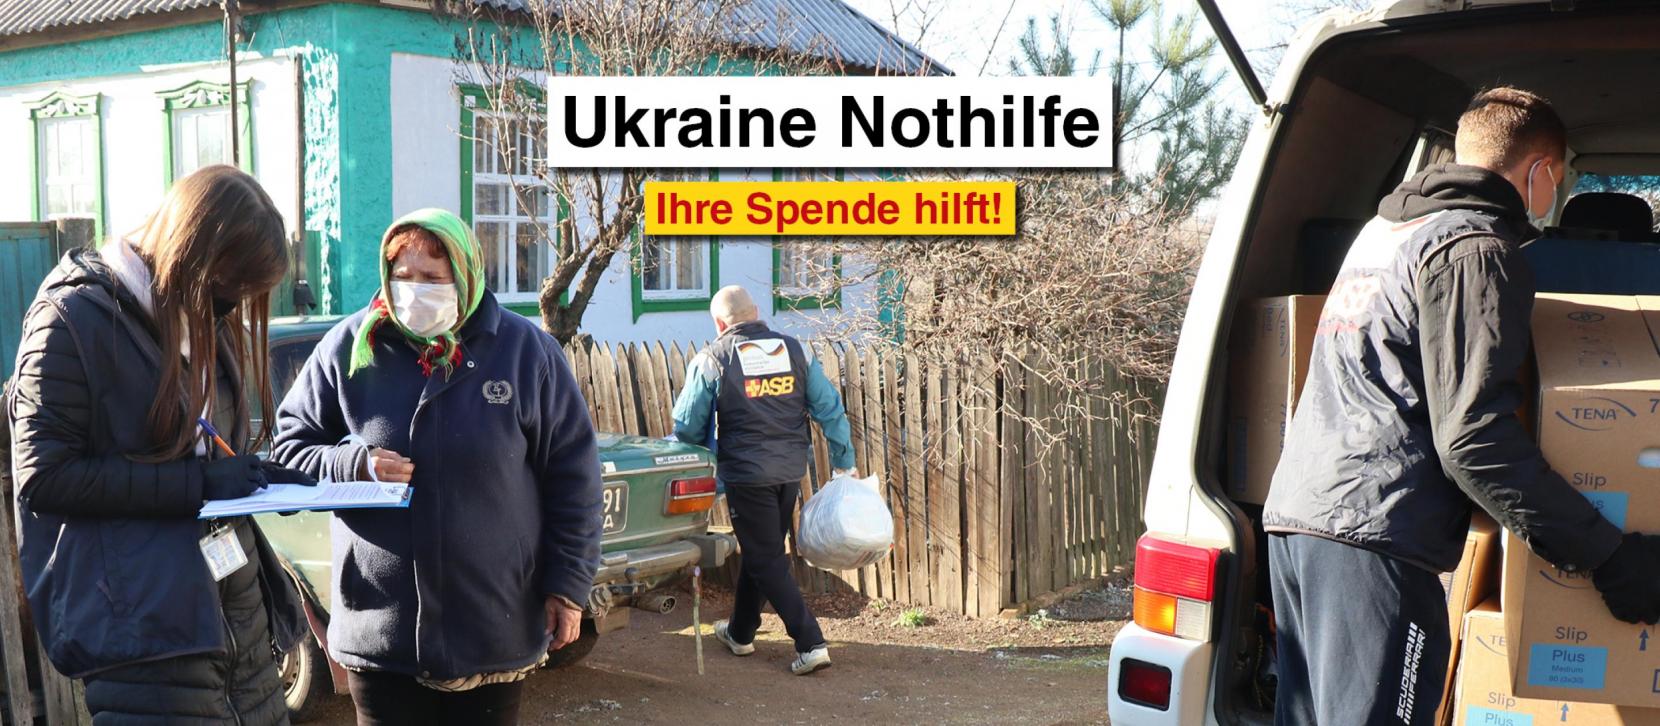 ukraine_nothilfe1_1.jpg